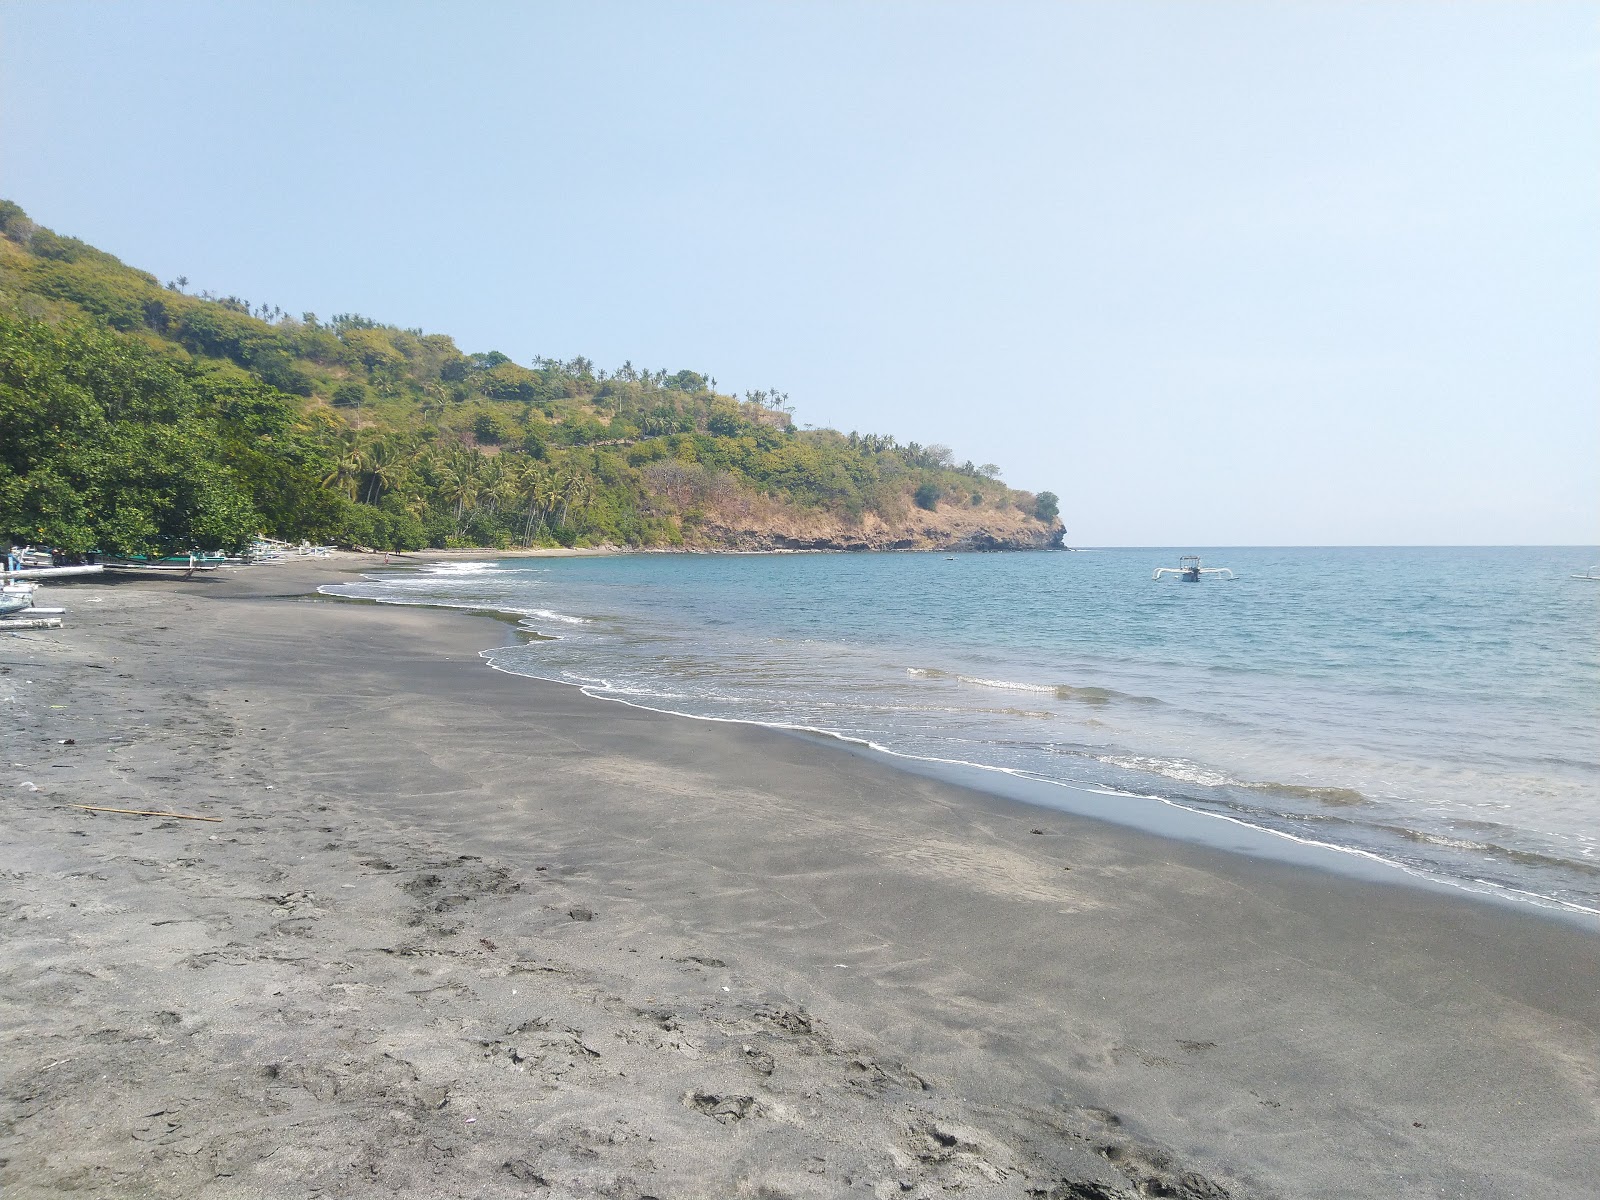 Foto von Pantai malimbu mit heller sand Oberfläche